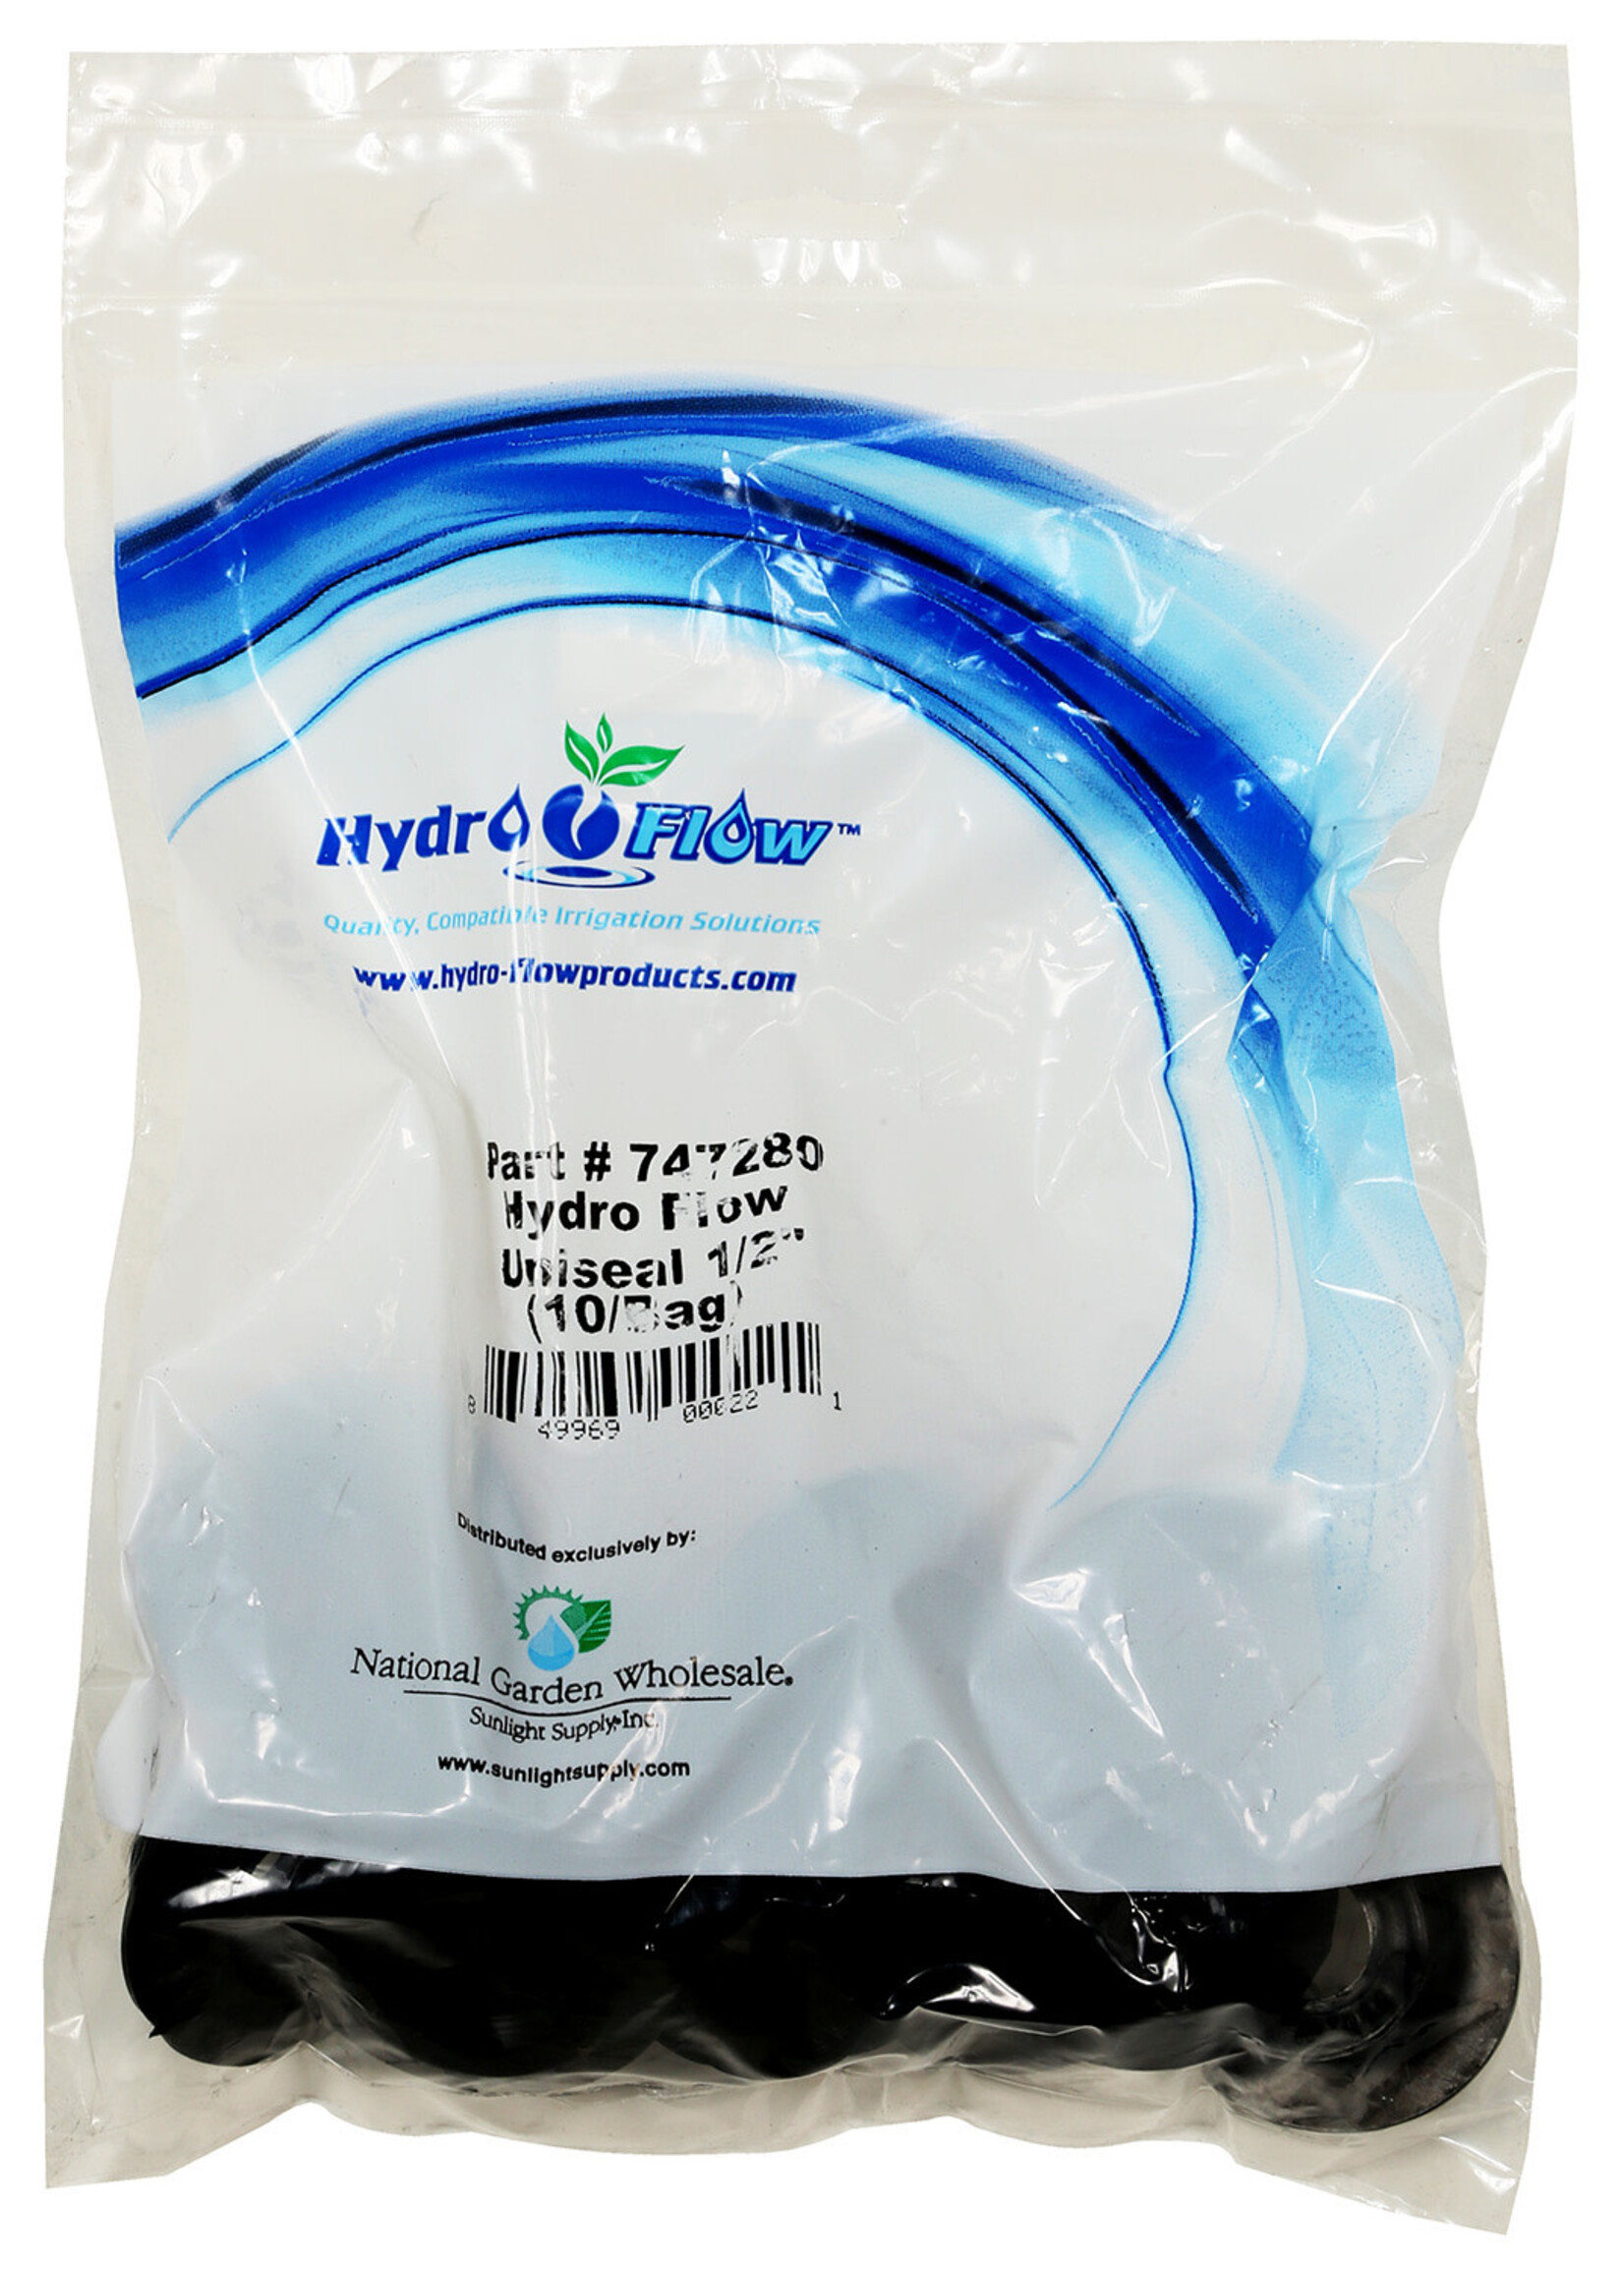 Hydro Flow Hydro Flow  Uniseal 1/2"- 10 pack